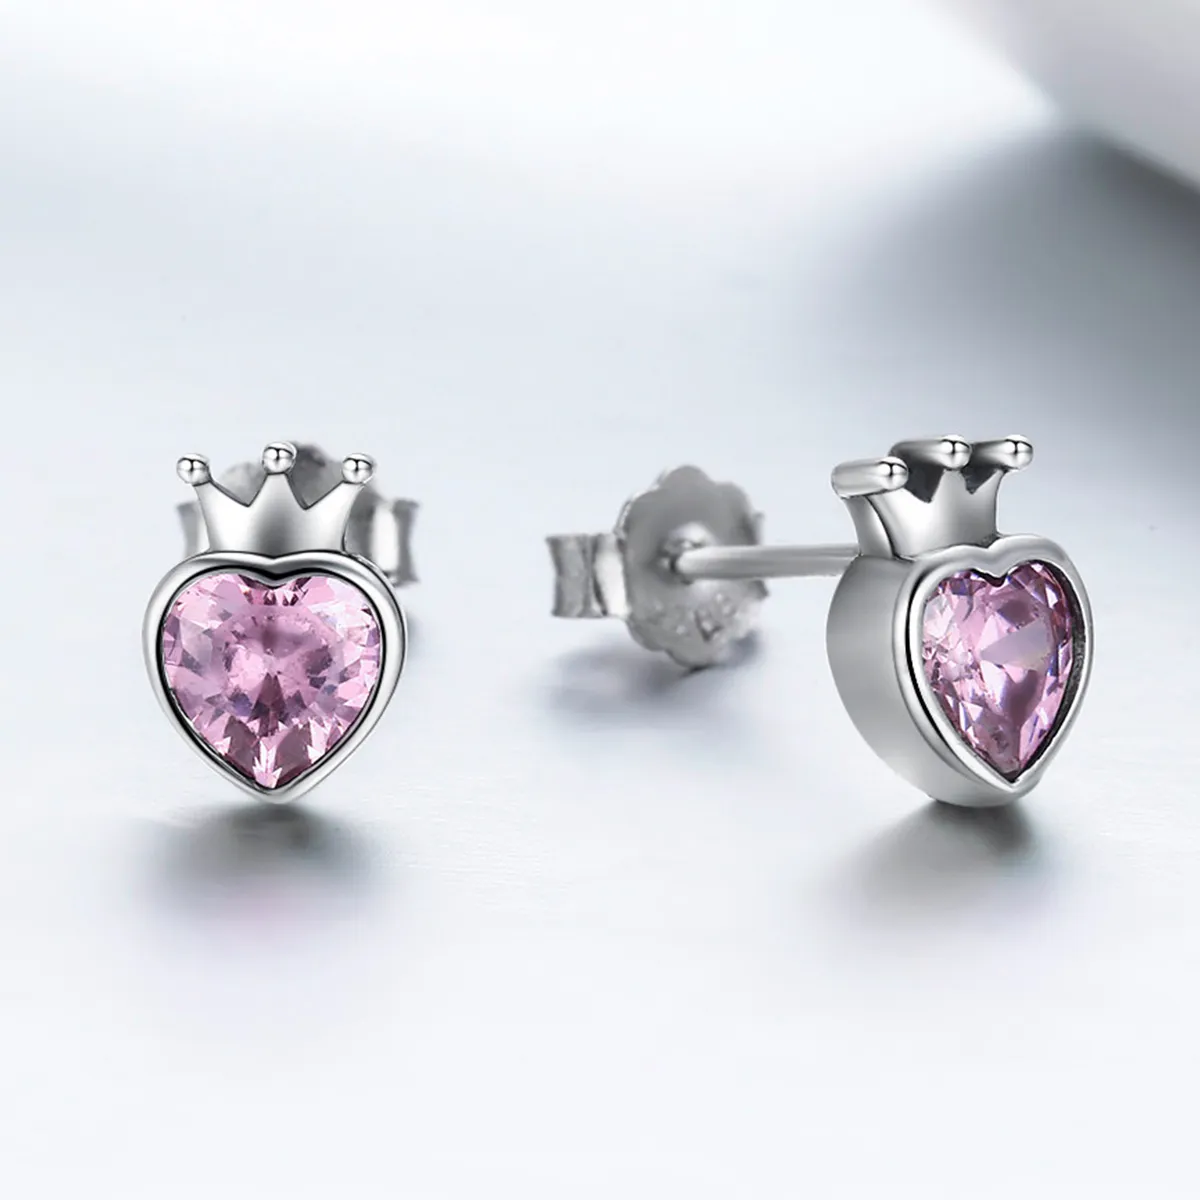 Pandora Style Silver Crowning Heart Stud Earrings - SCE174